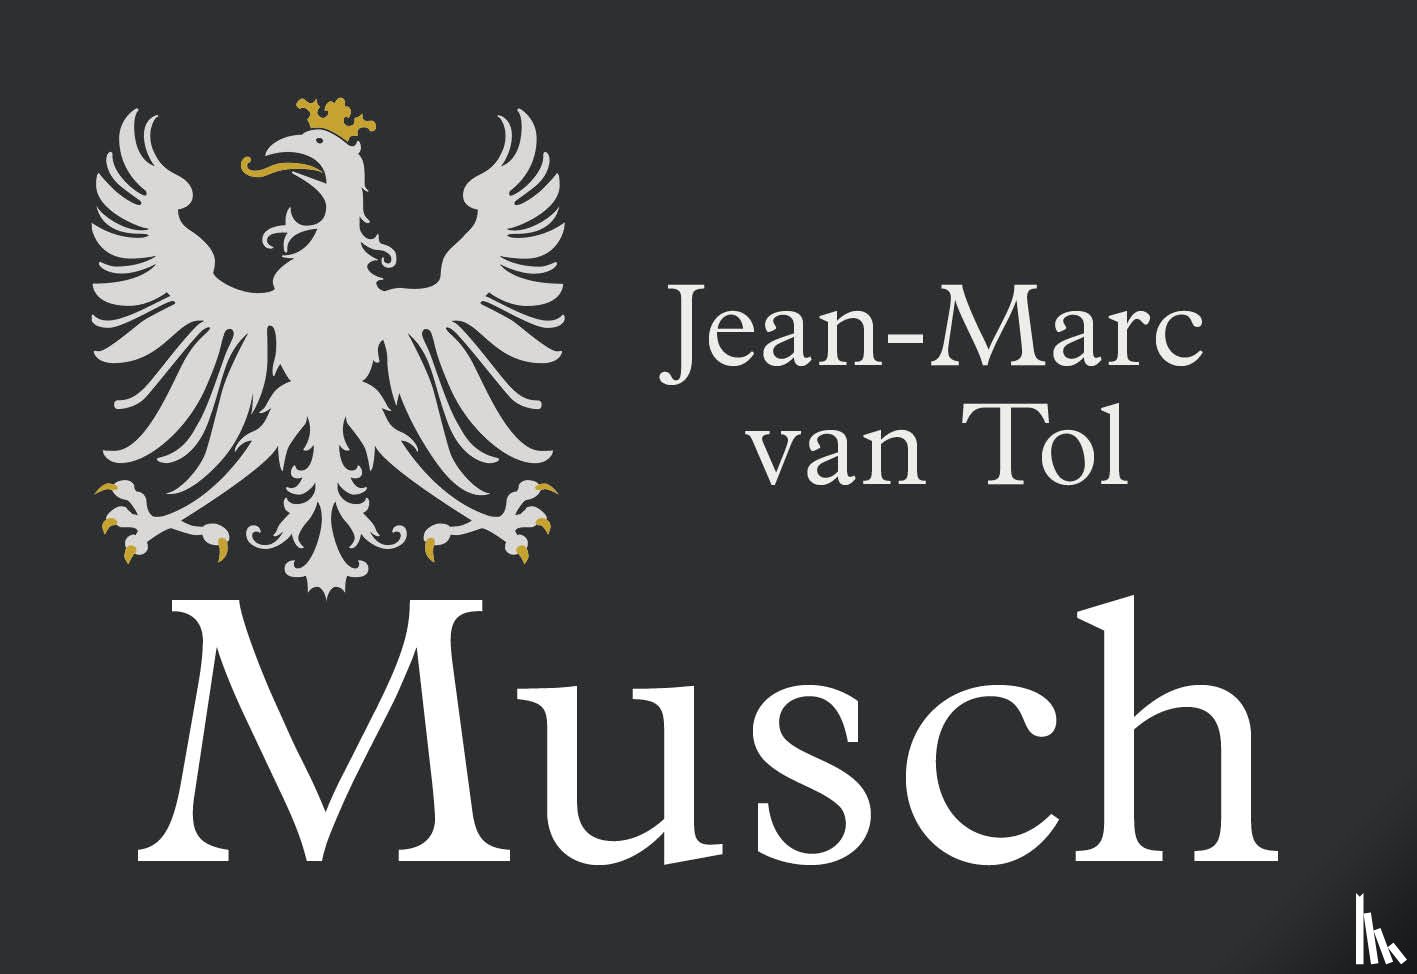 Tol, Jean-Marc van - Musch DL